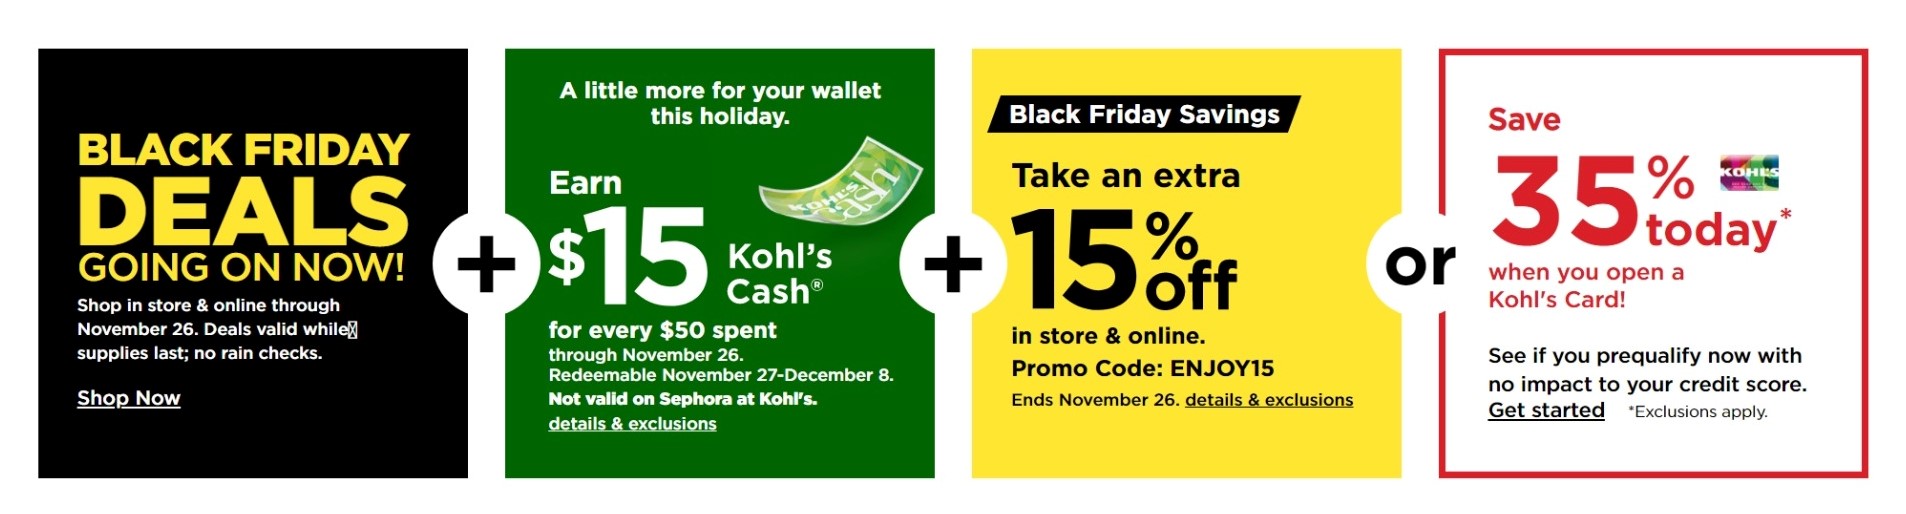 MAJOR Savings with Stacking Black Friday Discounts at Kohl’s!